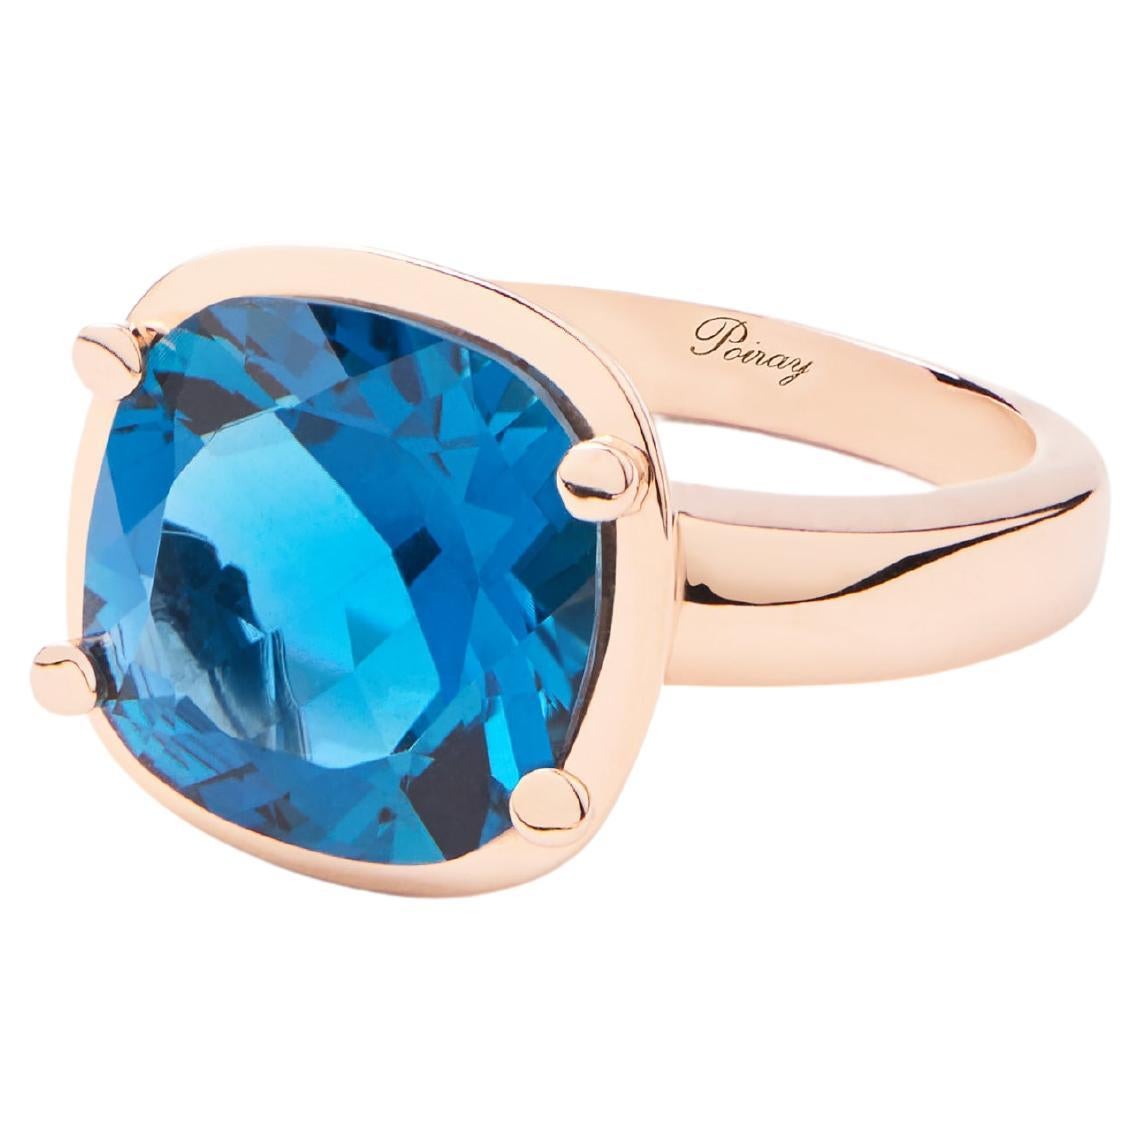 18 Carat Gold and Topaze blue london Ring, Rose Gold, Filles Antik Collection